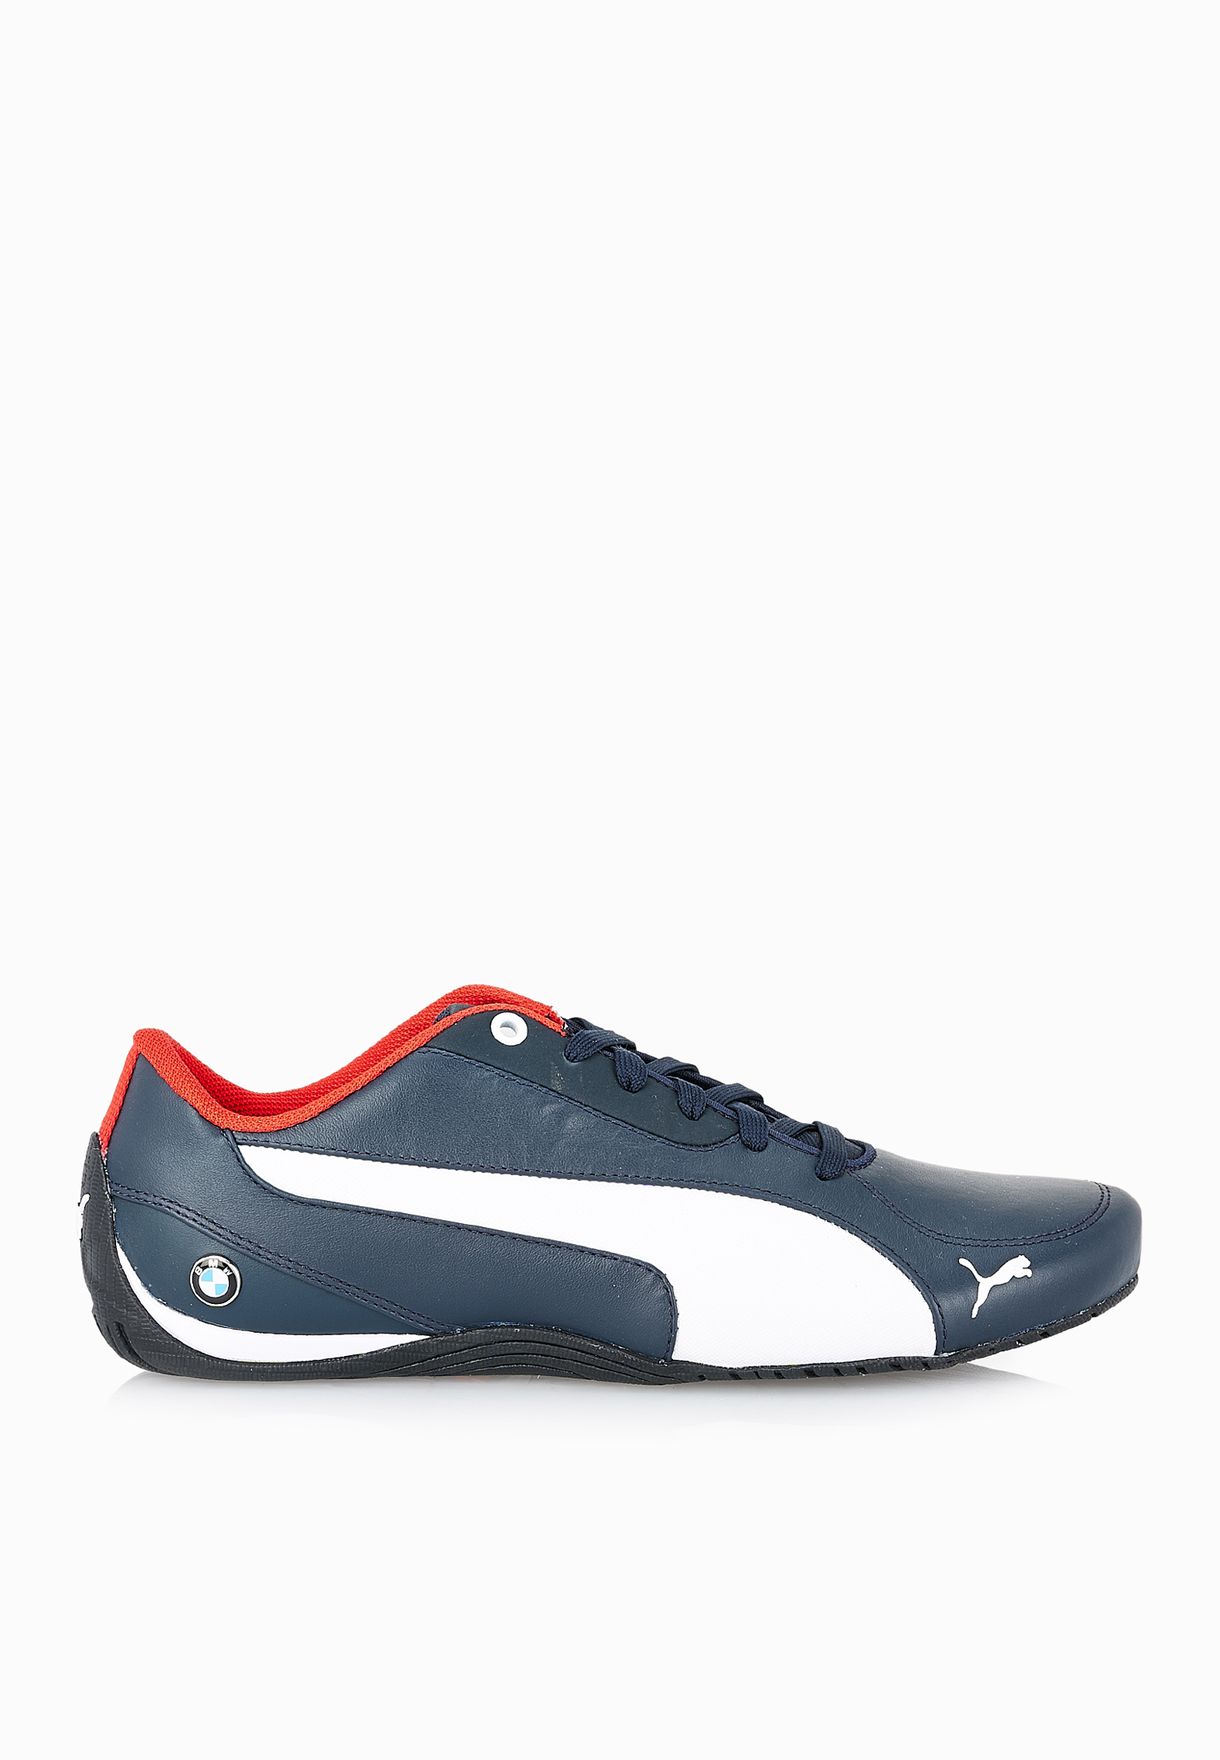 puma drift cat 5 bmw nm blue sneakers